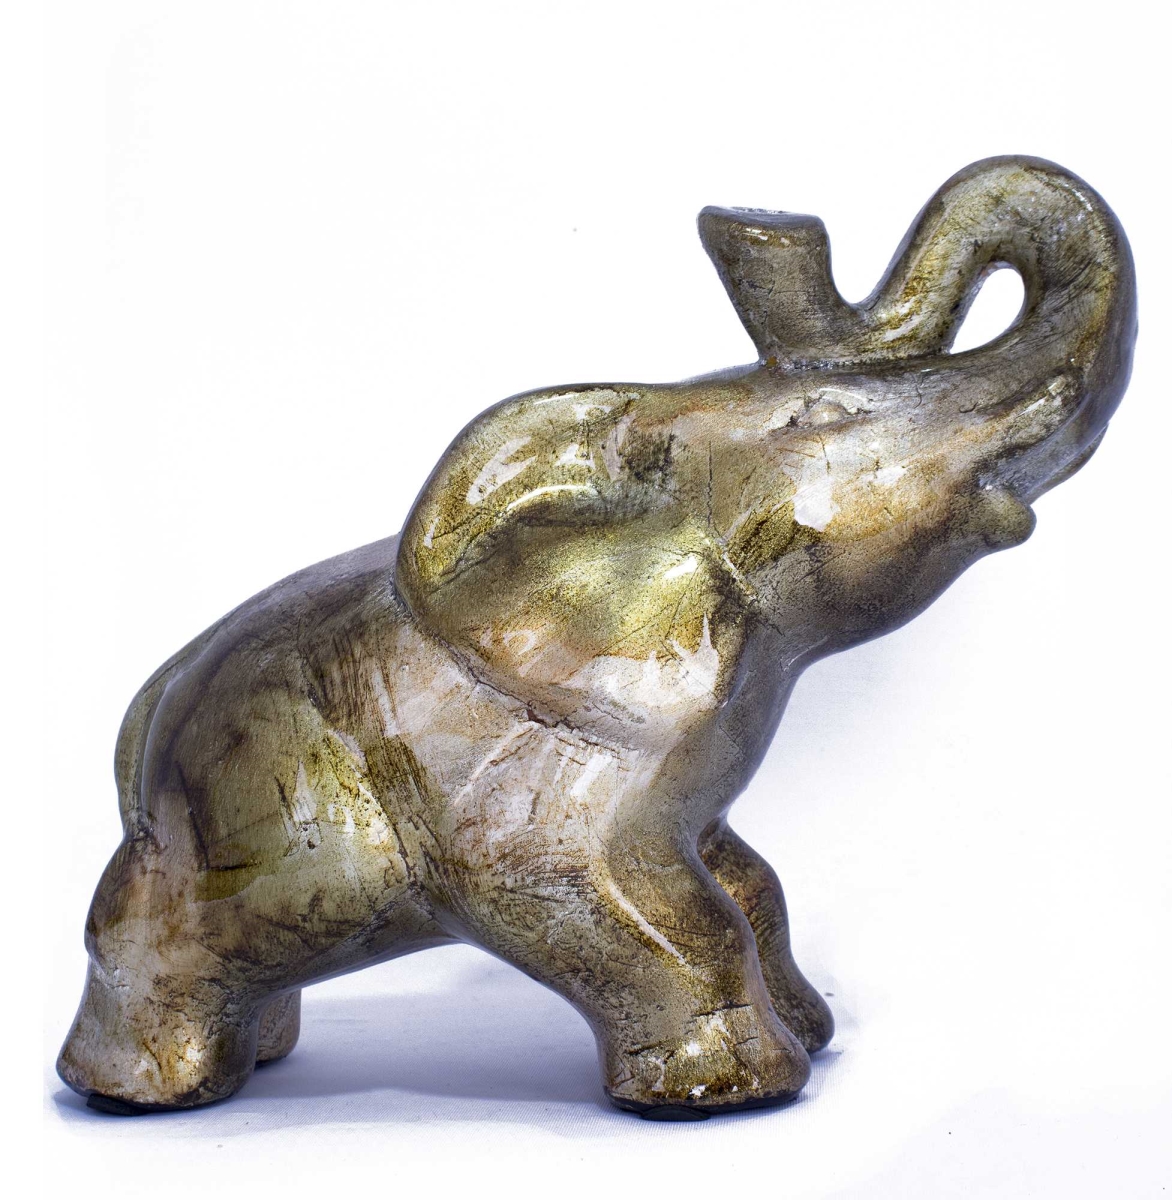 319660 10 In. Decorative Ceramic Elephant - Gold